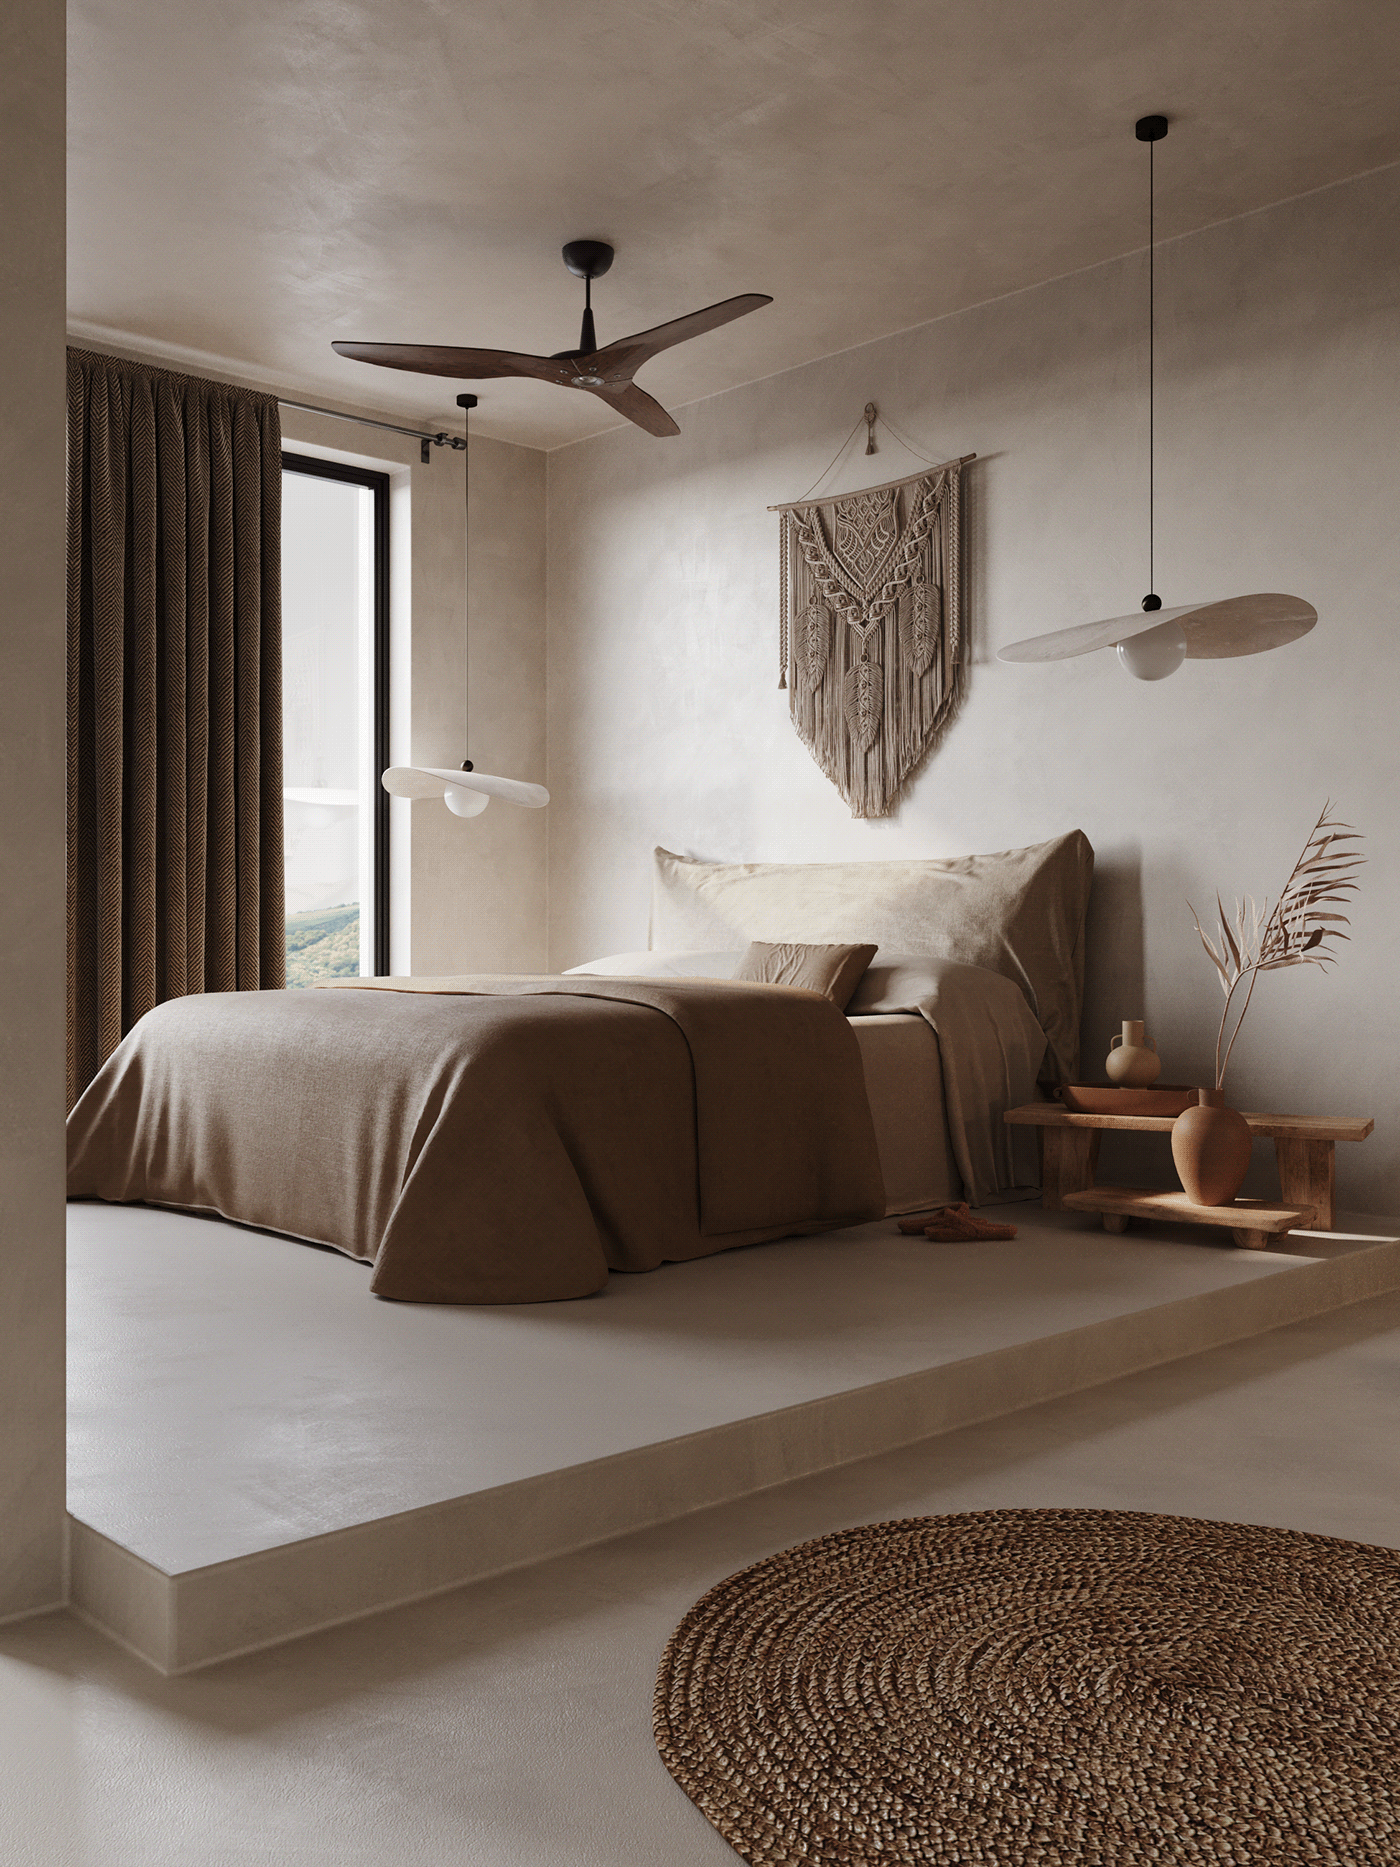 3ds max archviz bedroom CGI corona render  Interior interior design  Render